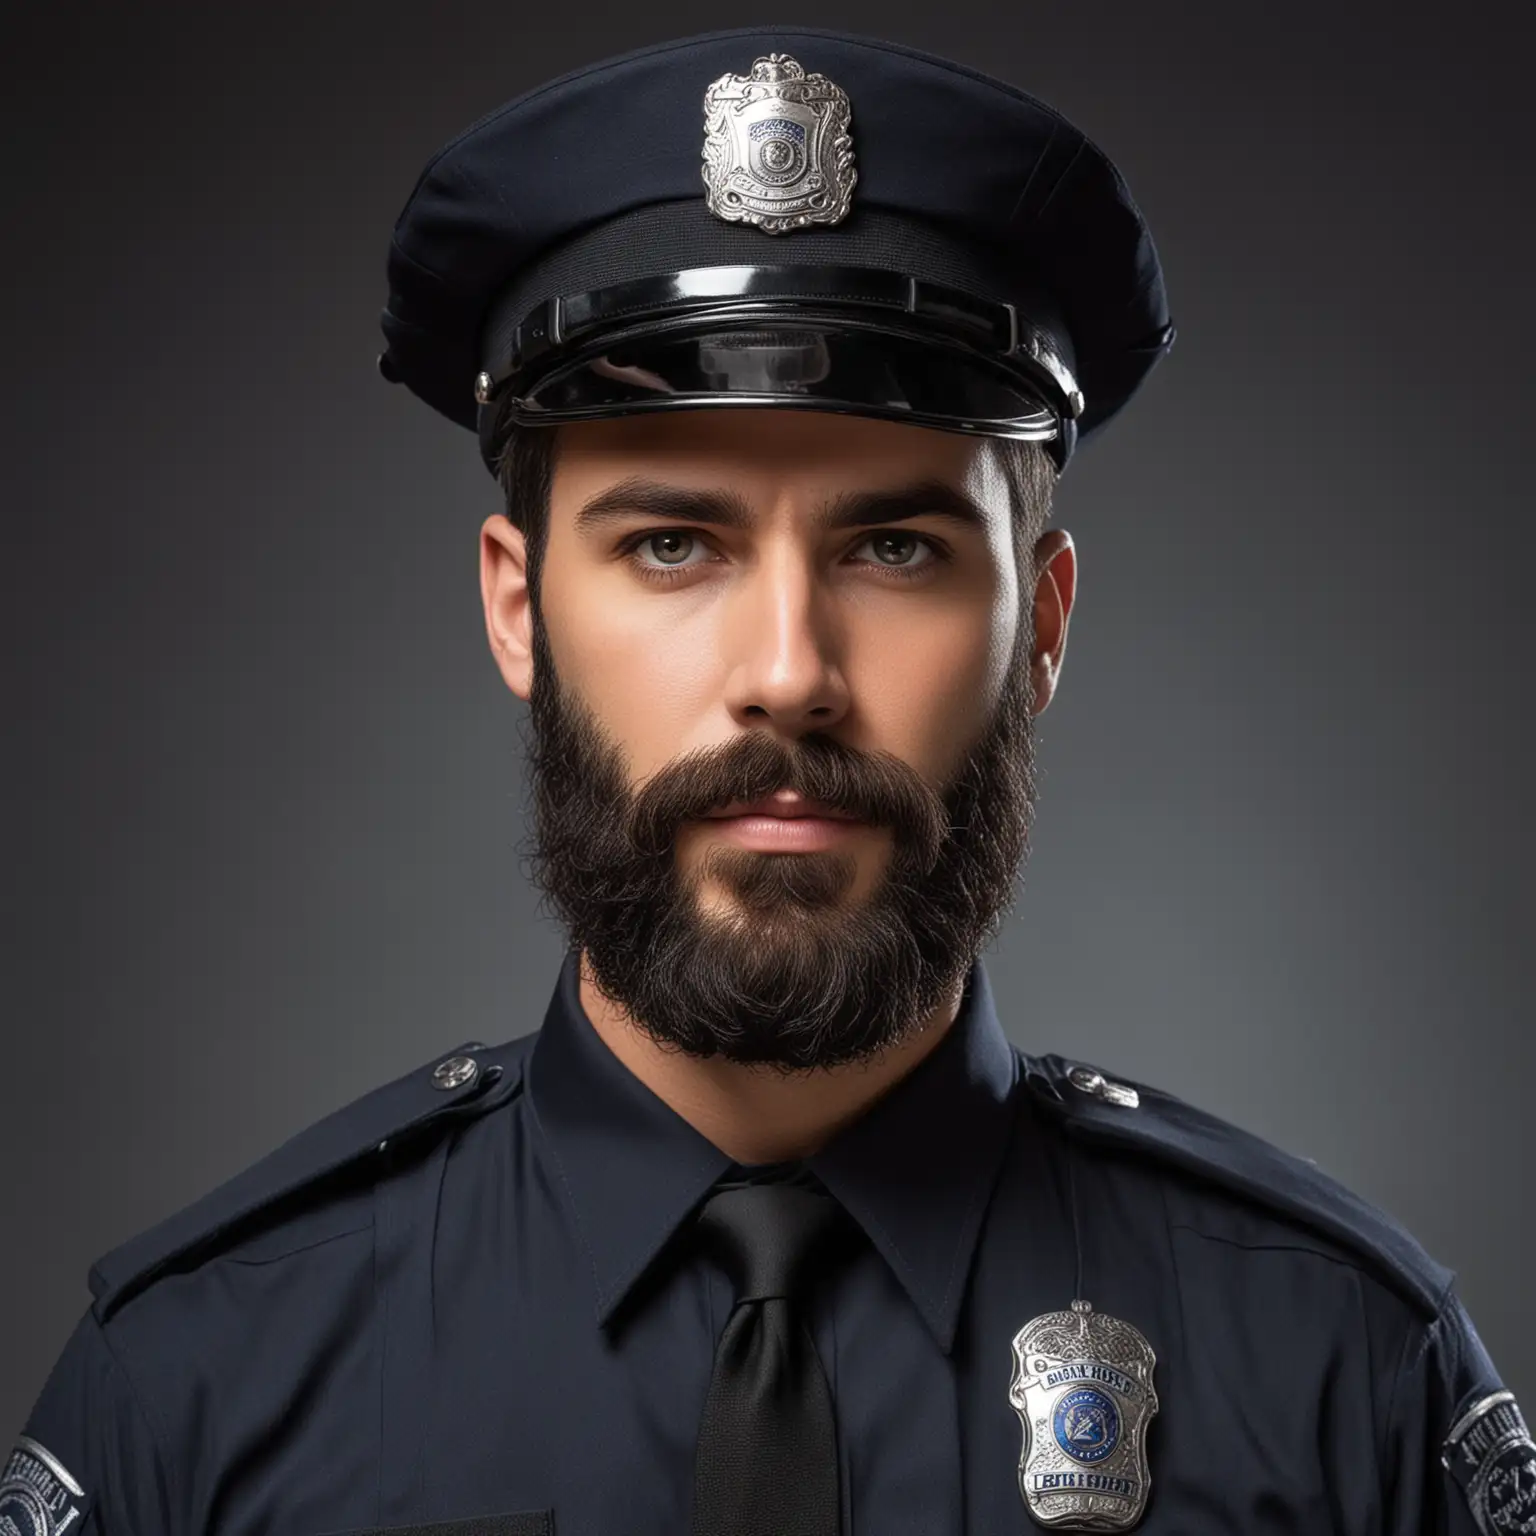 A gorgeous policeman with a large dark beard